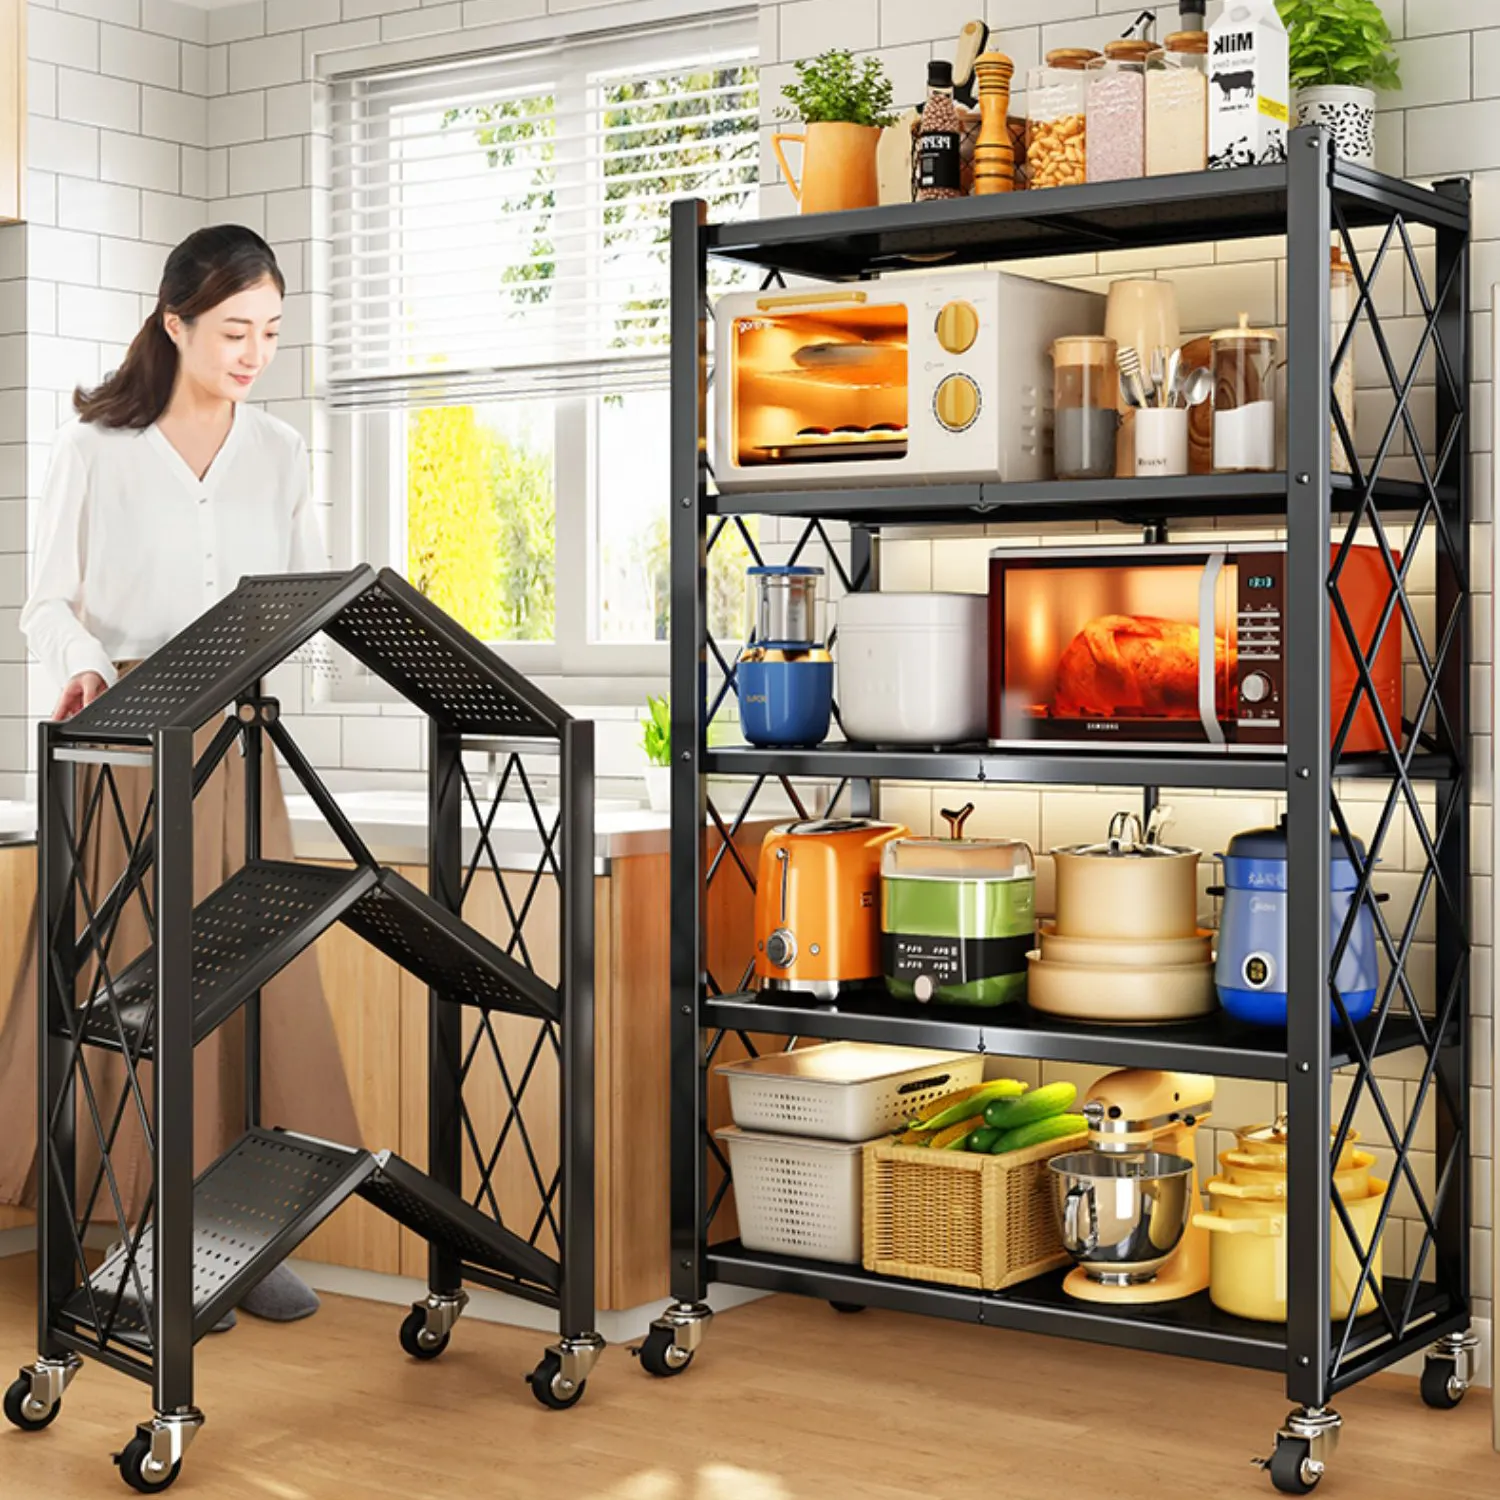 Household metal rack kitchen shelf foldable tableware shelves shelving units holders folding storage racks for kitchen